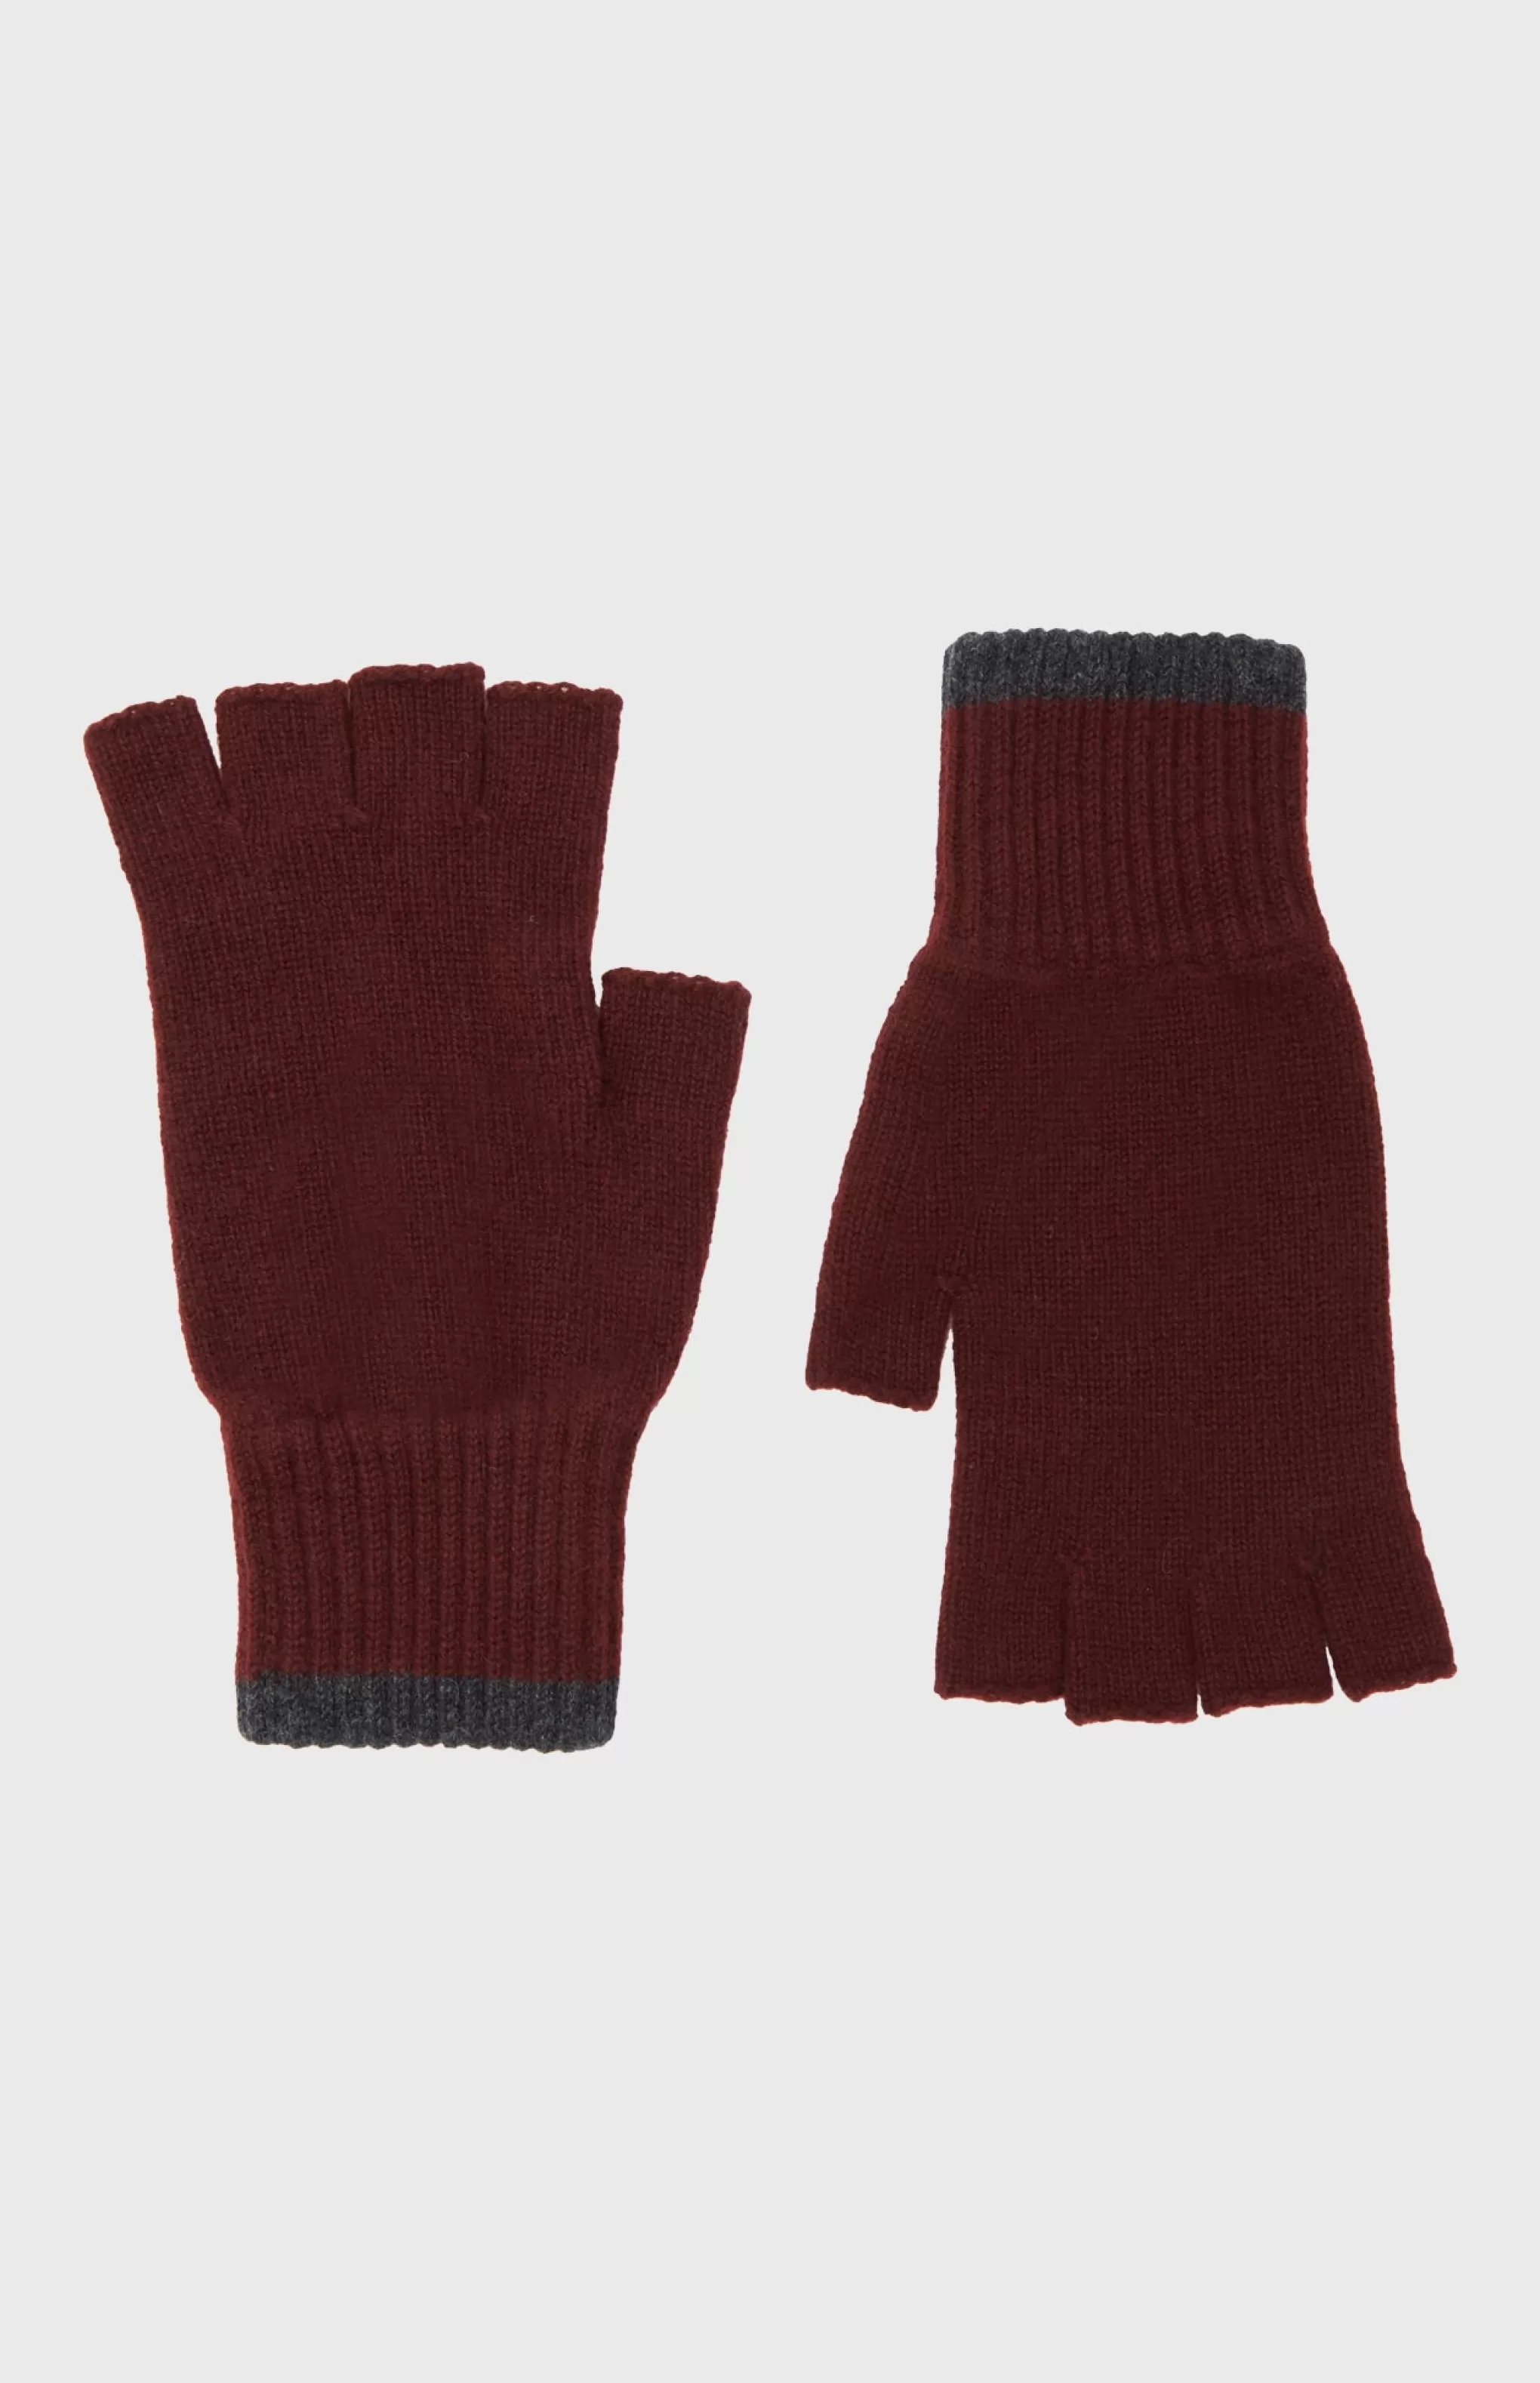 Cheap Cashmere Fingerless Gloves Contrast Ribs In Dark Claret Men Cashmere